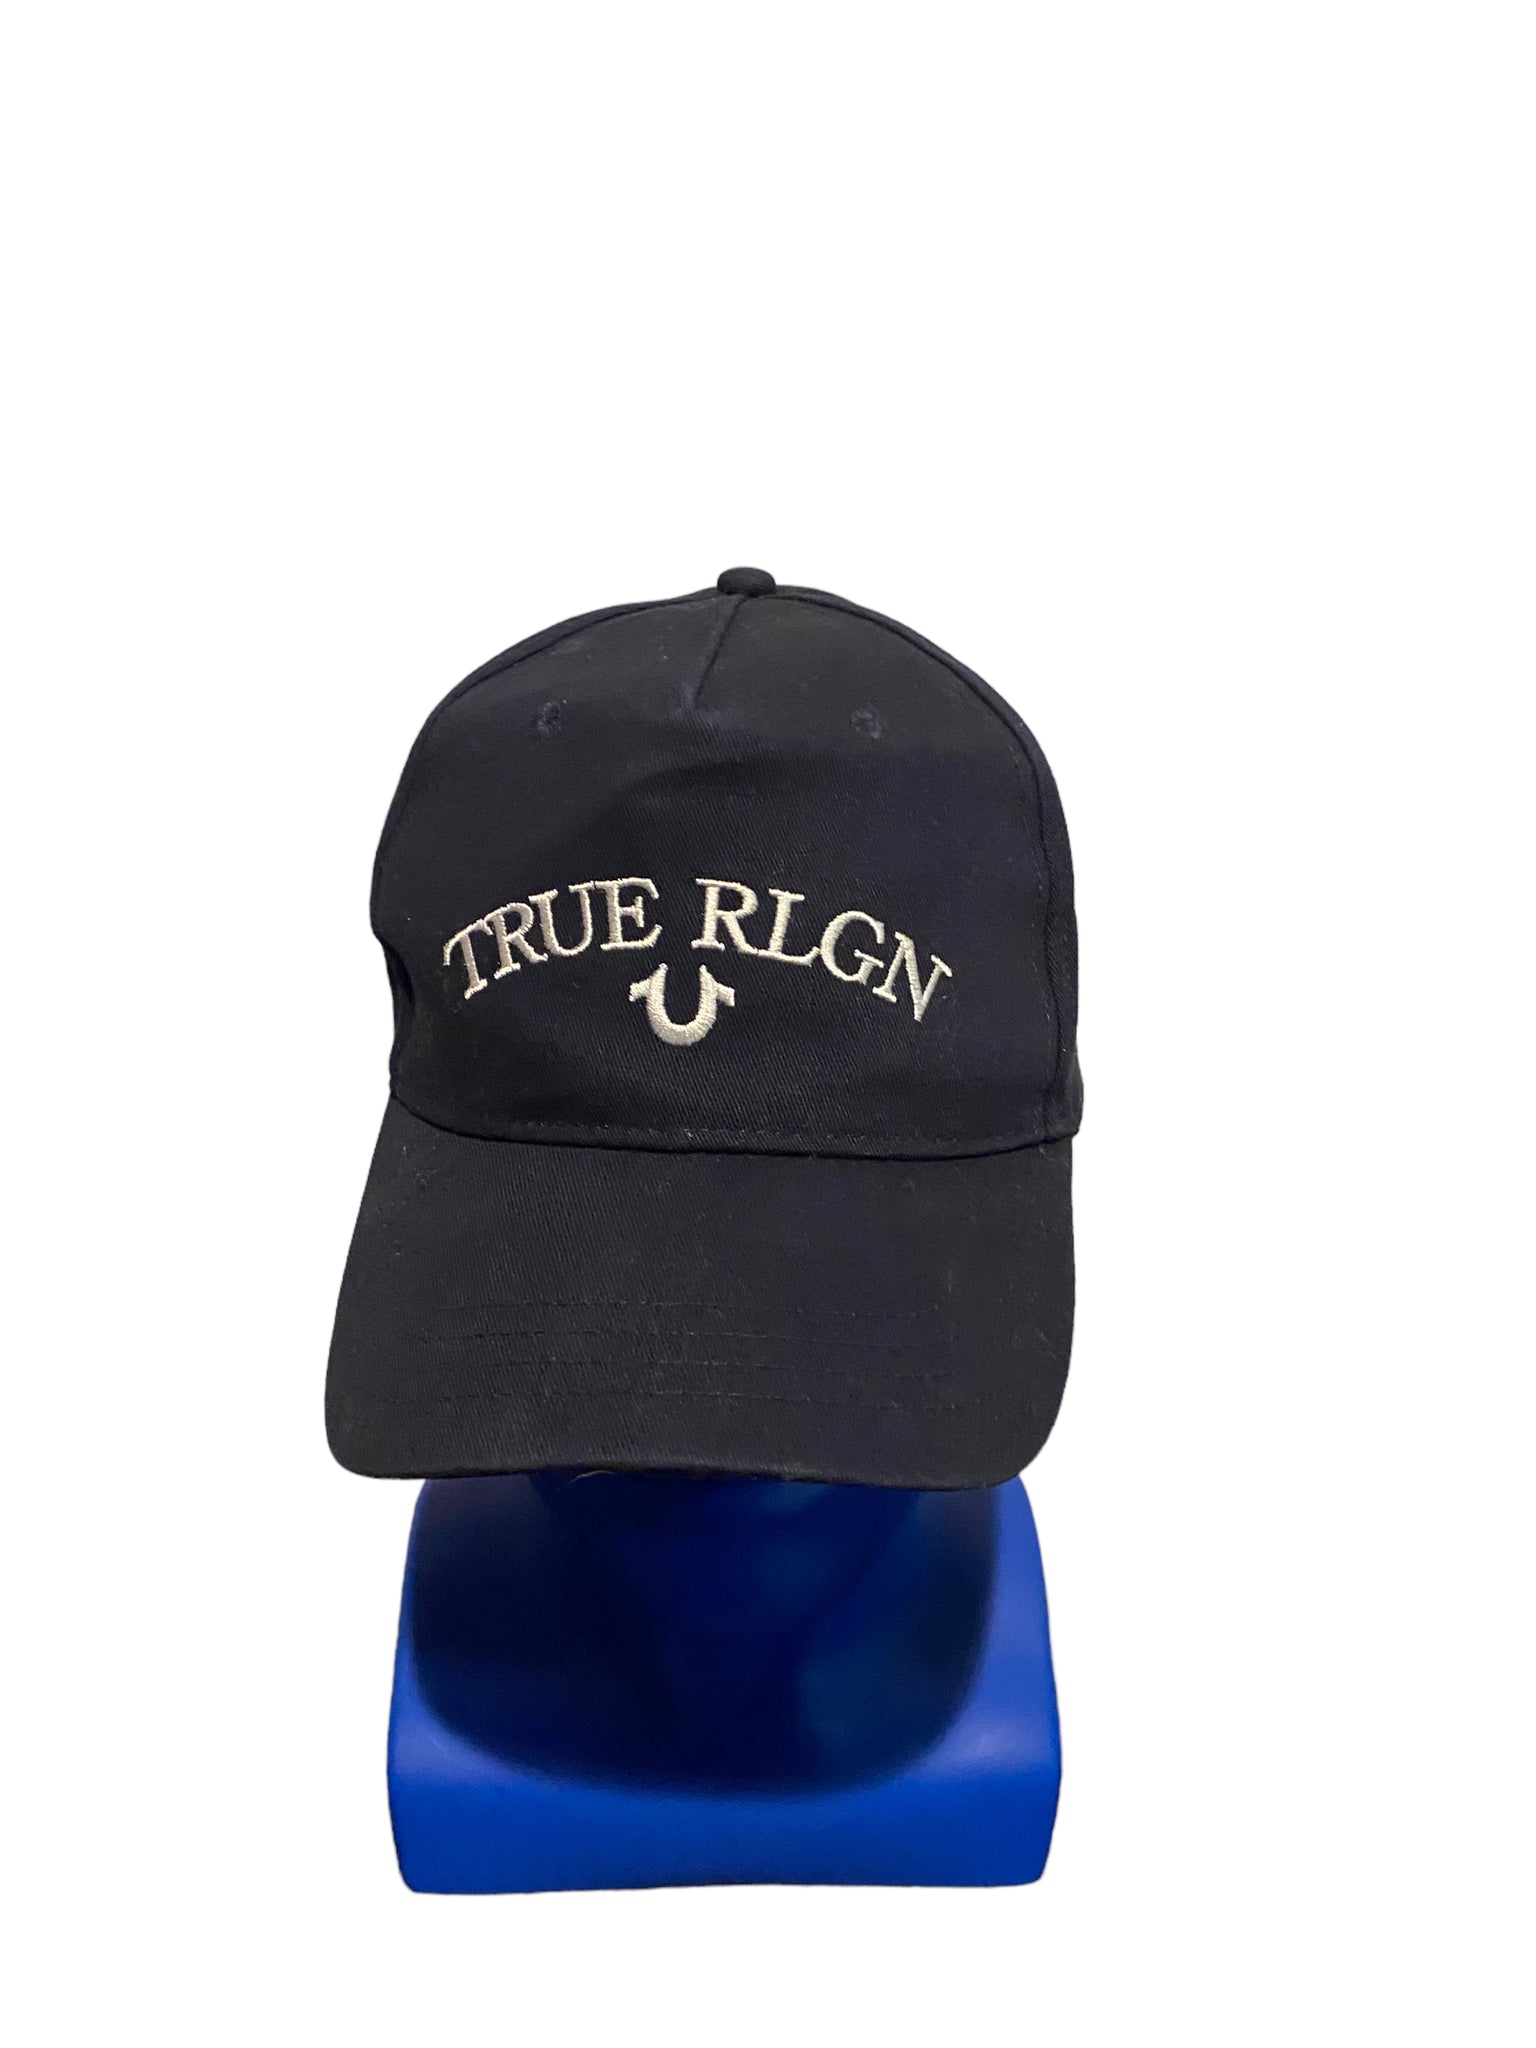 true religion embroidered script and logo hat dark blue snapback